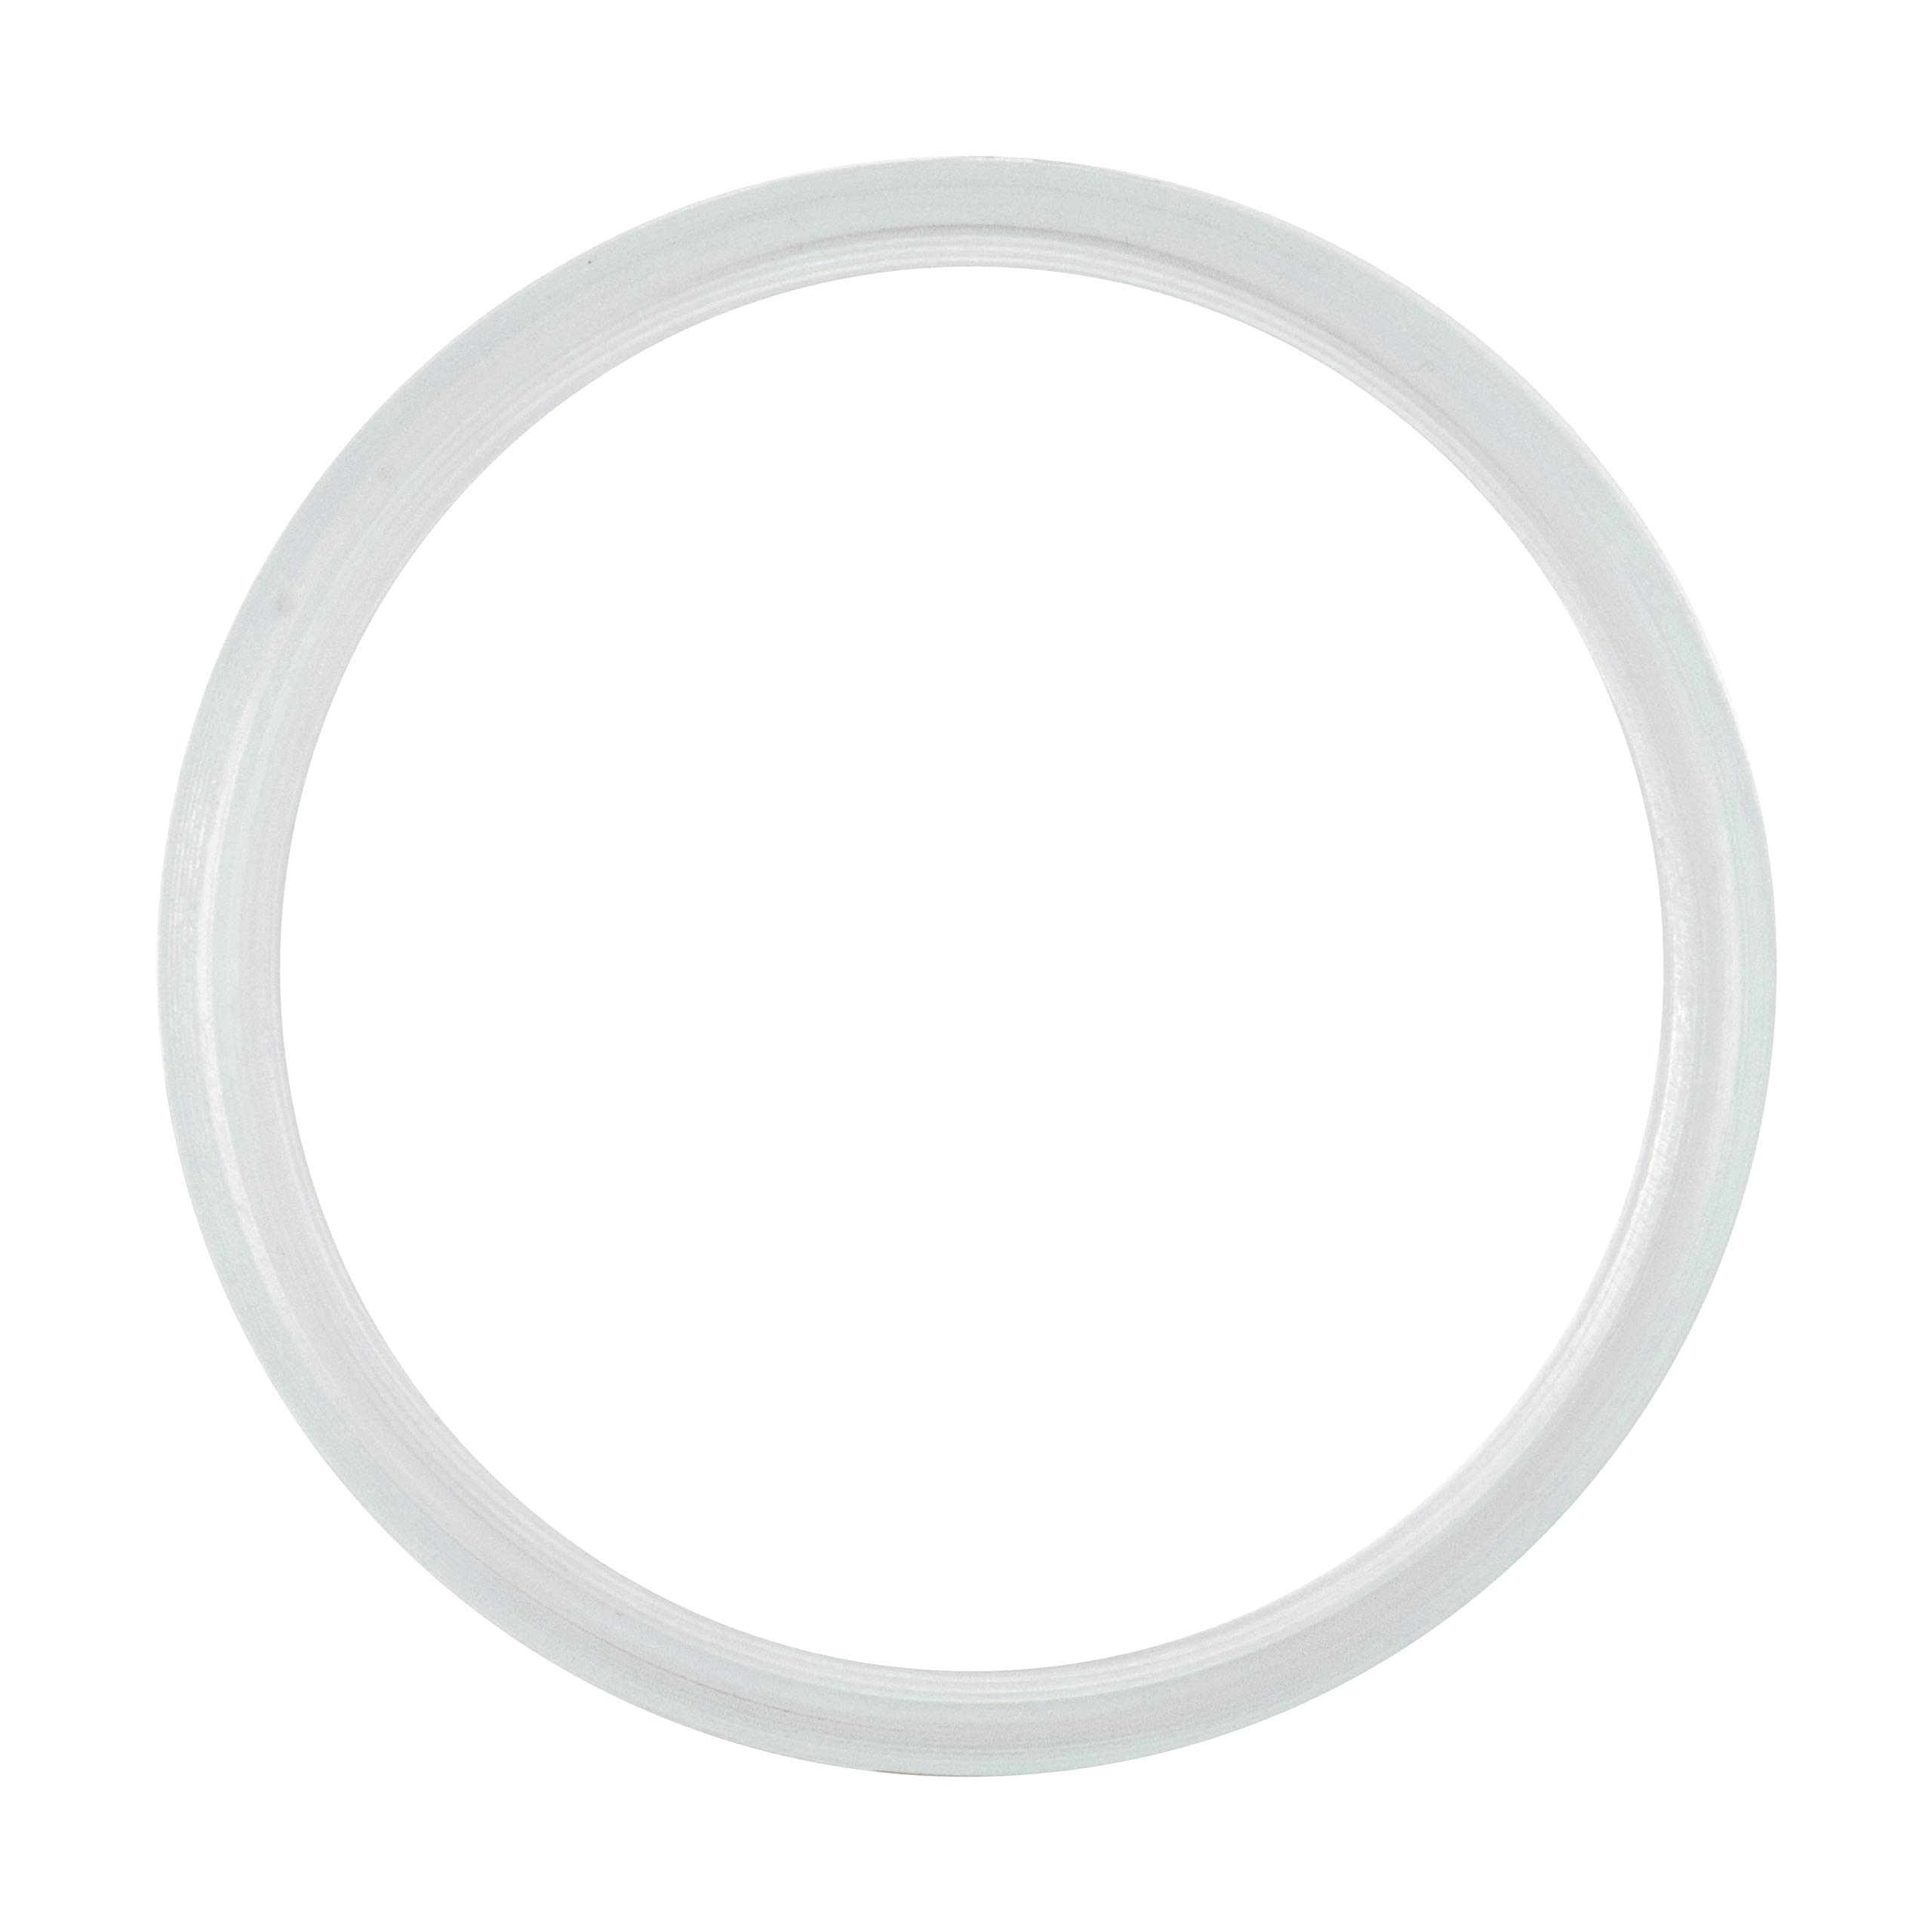 Univen Blender O-ring Gasket Seal 2 Pack Compatible with KitchenAid W10686132, W10221777, W10292571 fits 5KSB555, 5KSB5553, KSB565, KSB585, KSB650, KSB655 and KSB755